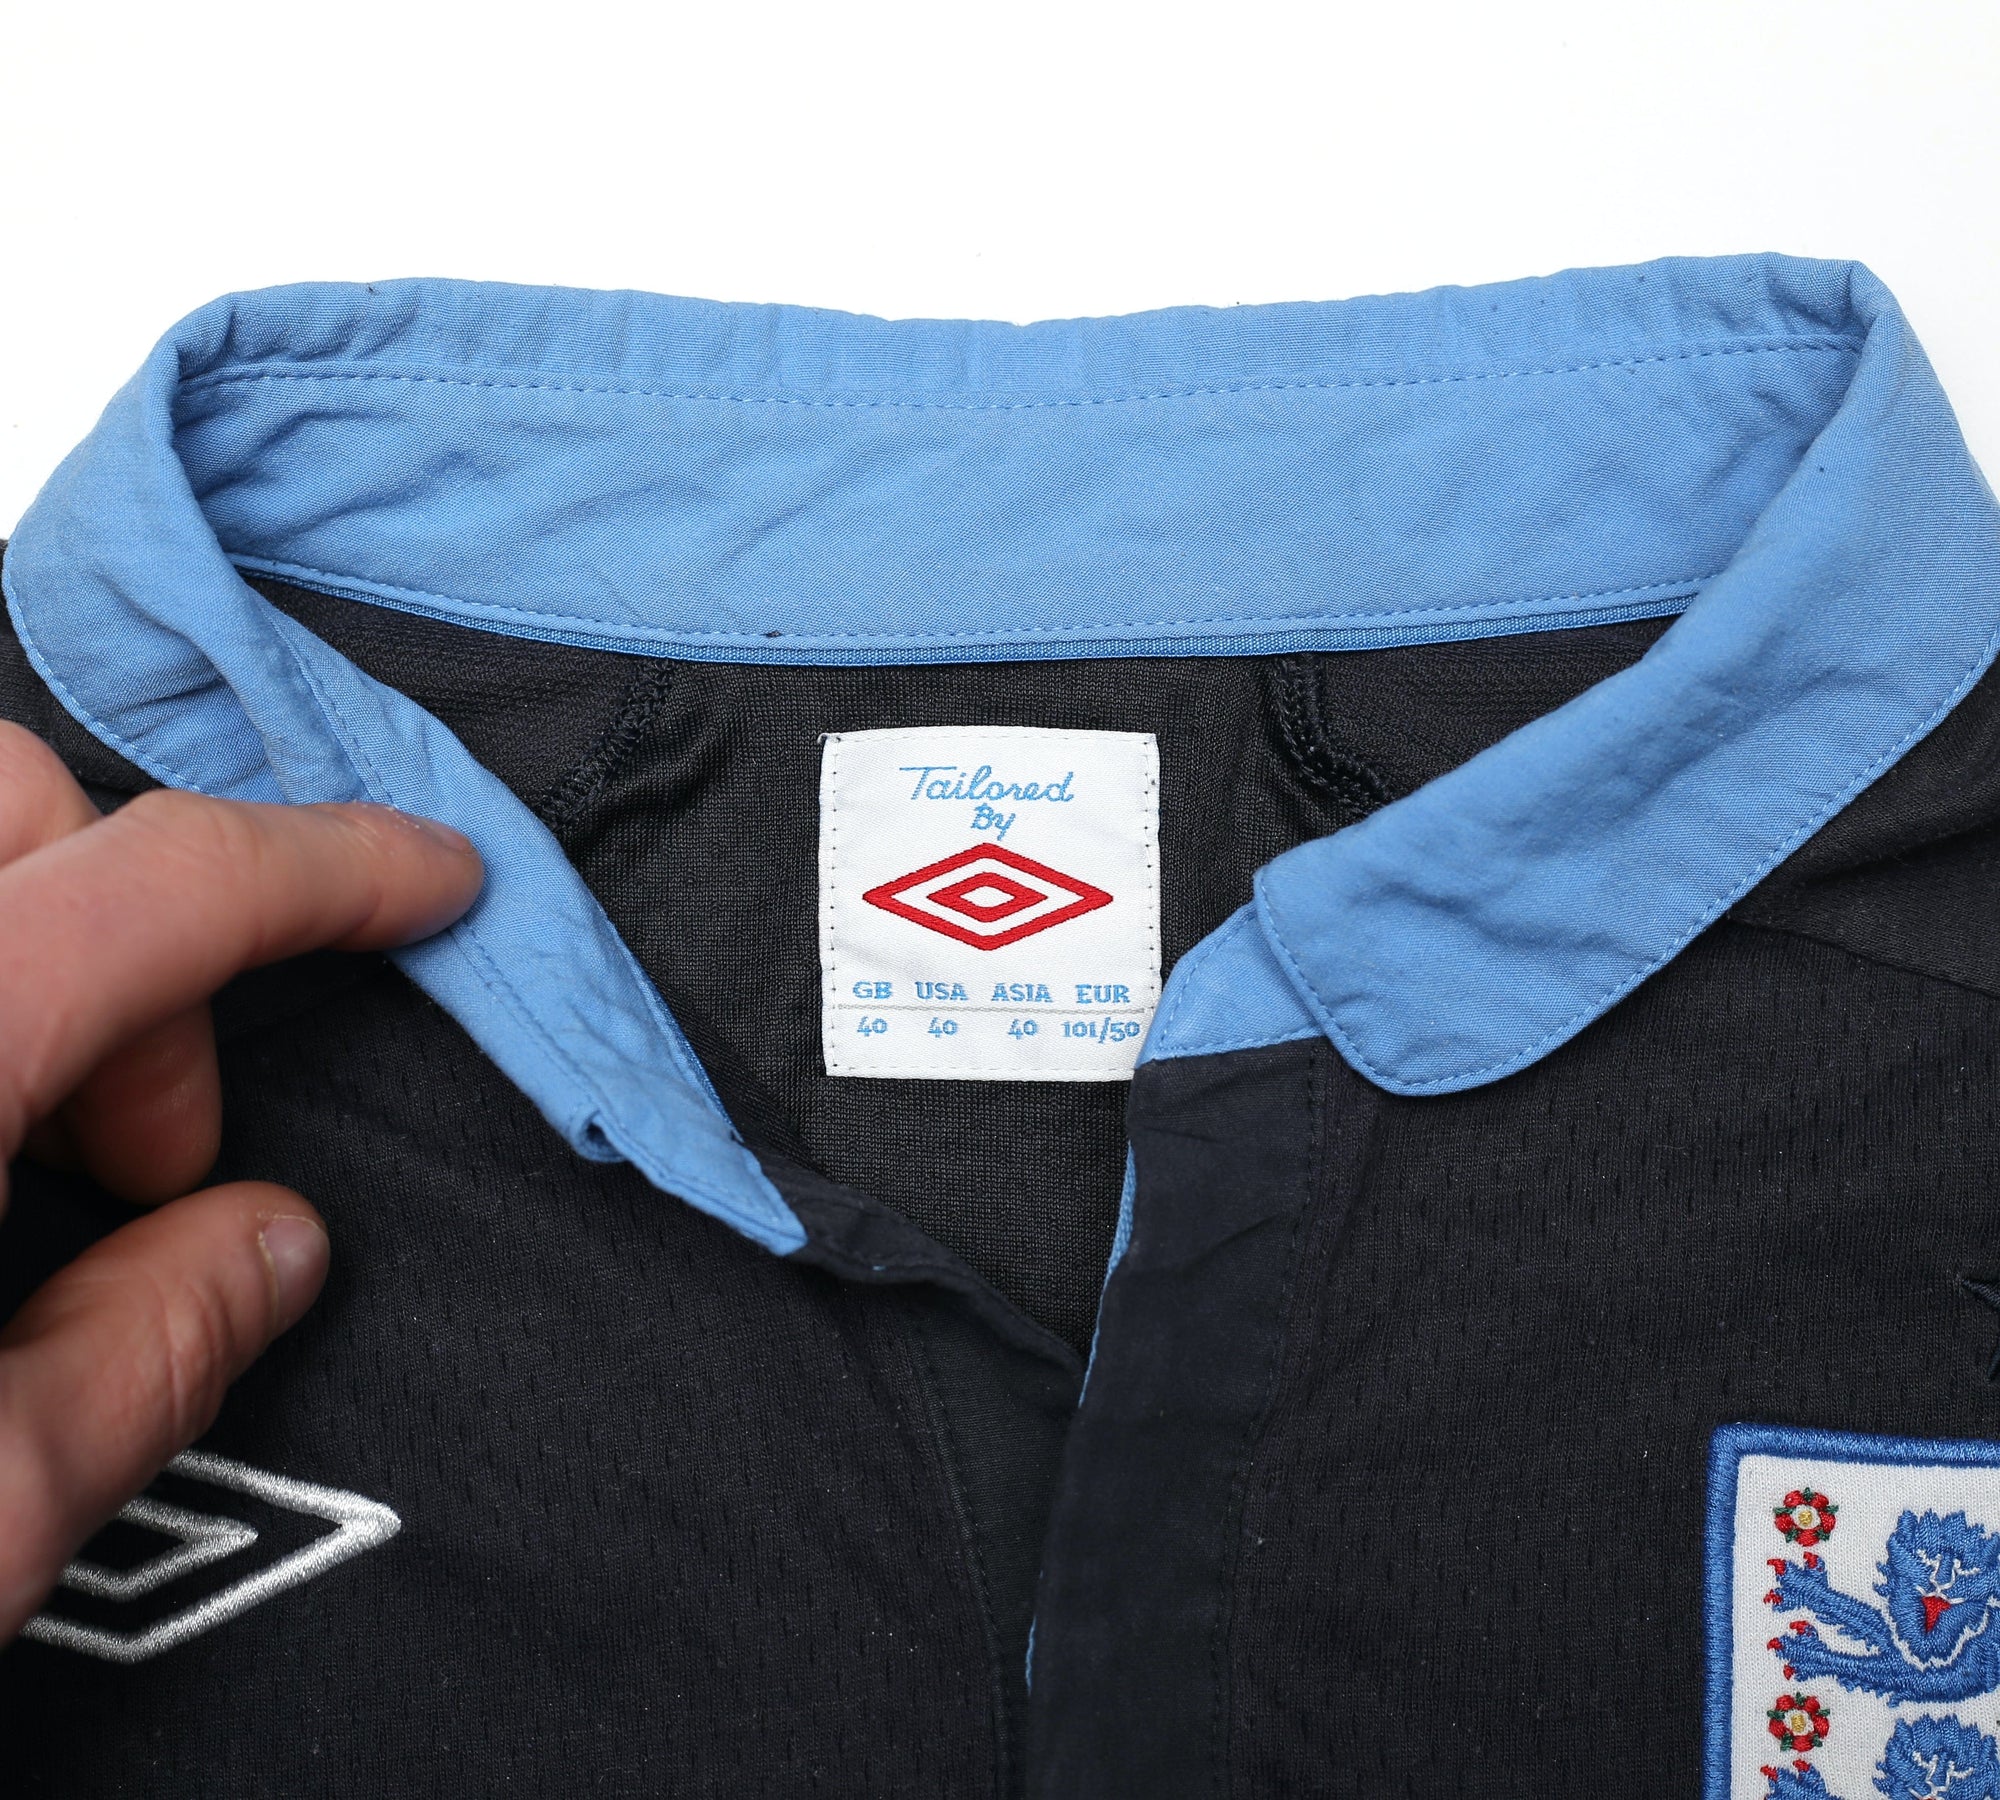 2012/13 ENGLAND Vintage Umbro Away Football Shirt (M) Euro 2012